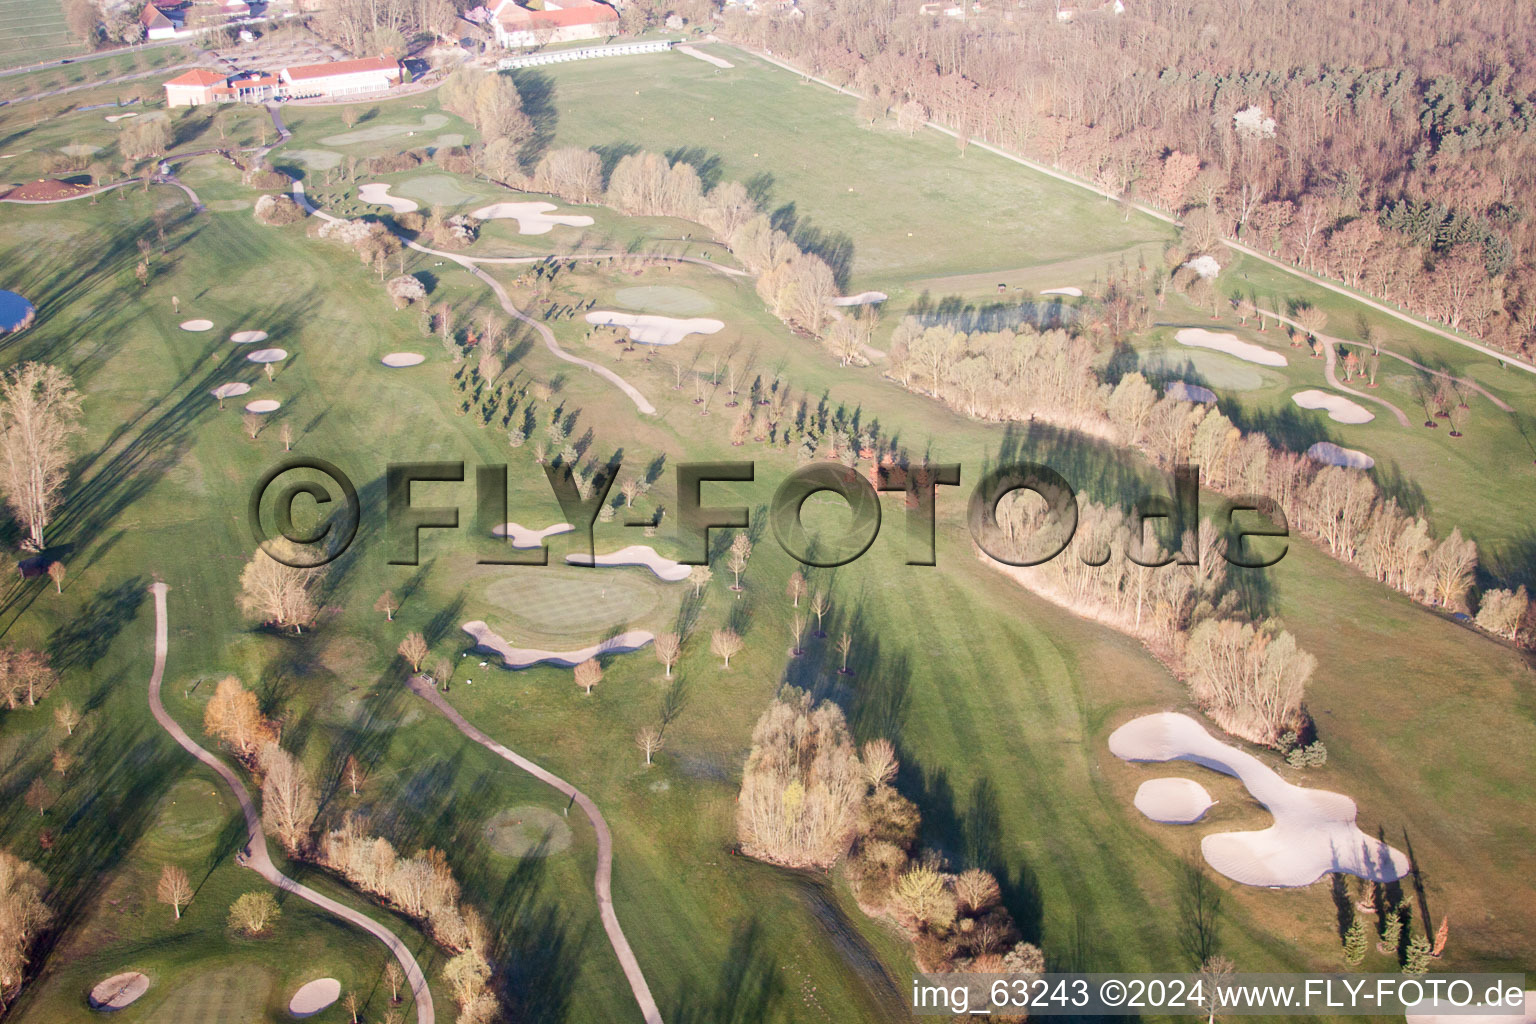 Bird's eye view of Grounds of the Golf course at Golfanlage Landgut Dreihof in Essingen in the state Rhineland-Palatinate